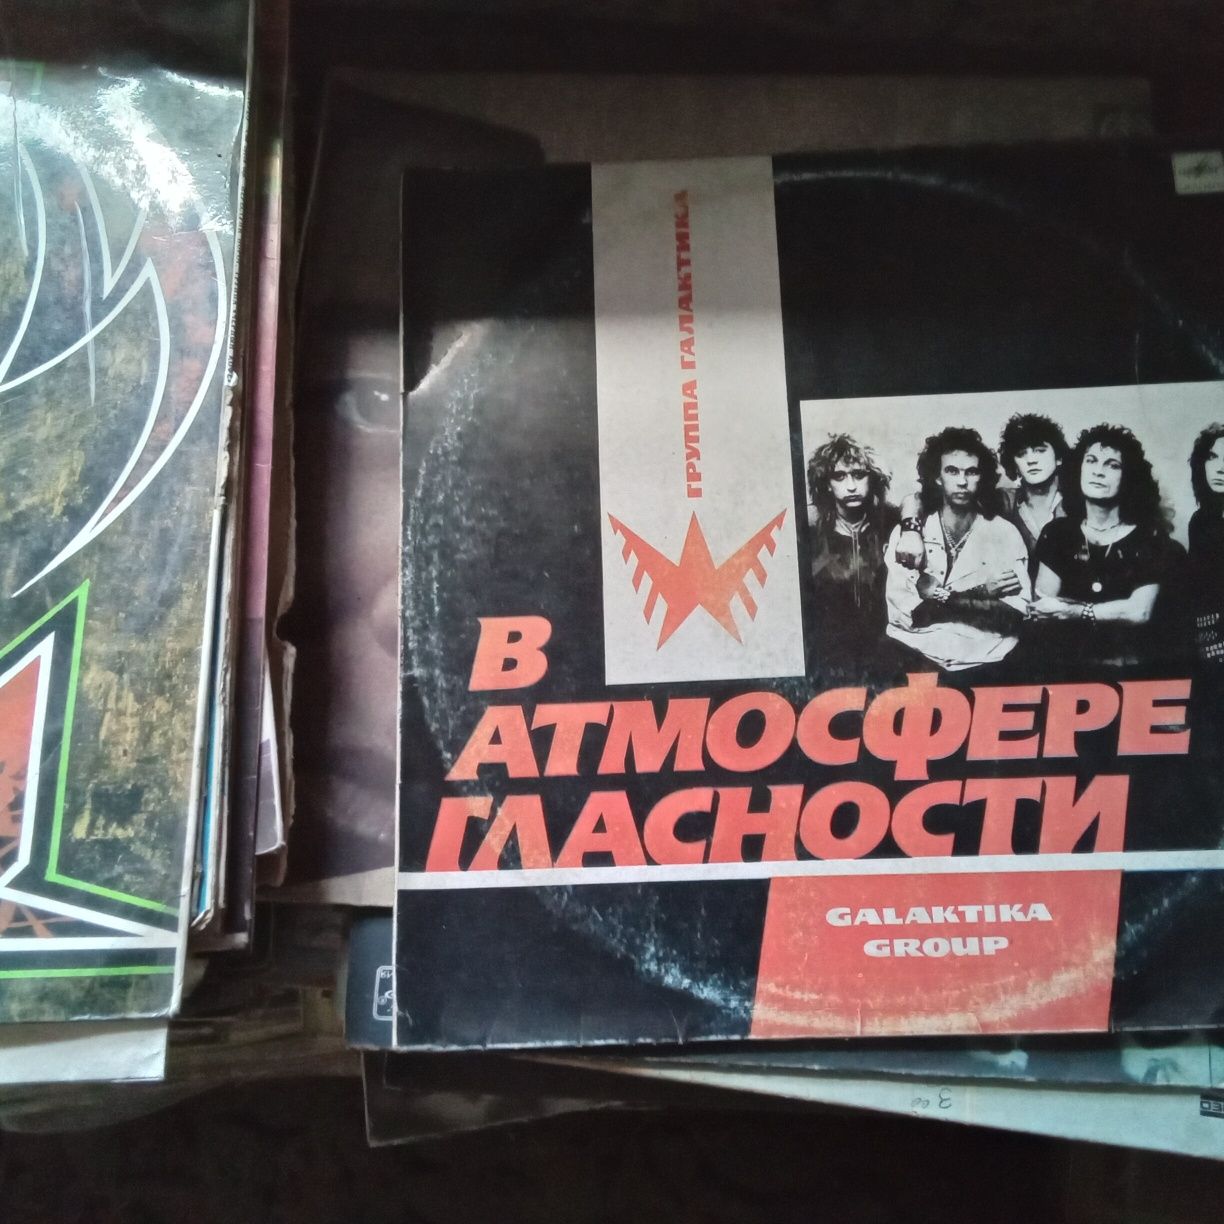 Пластинки советского периода